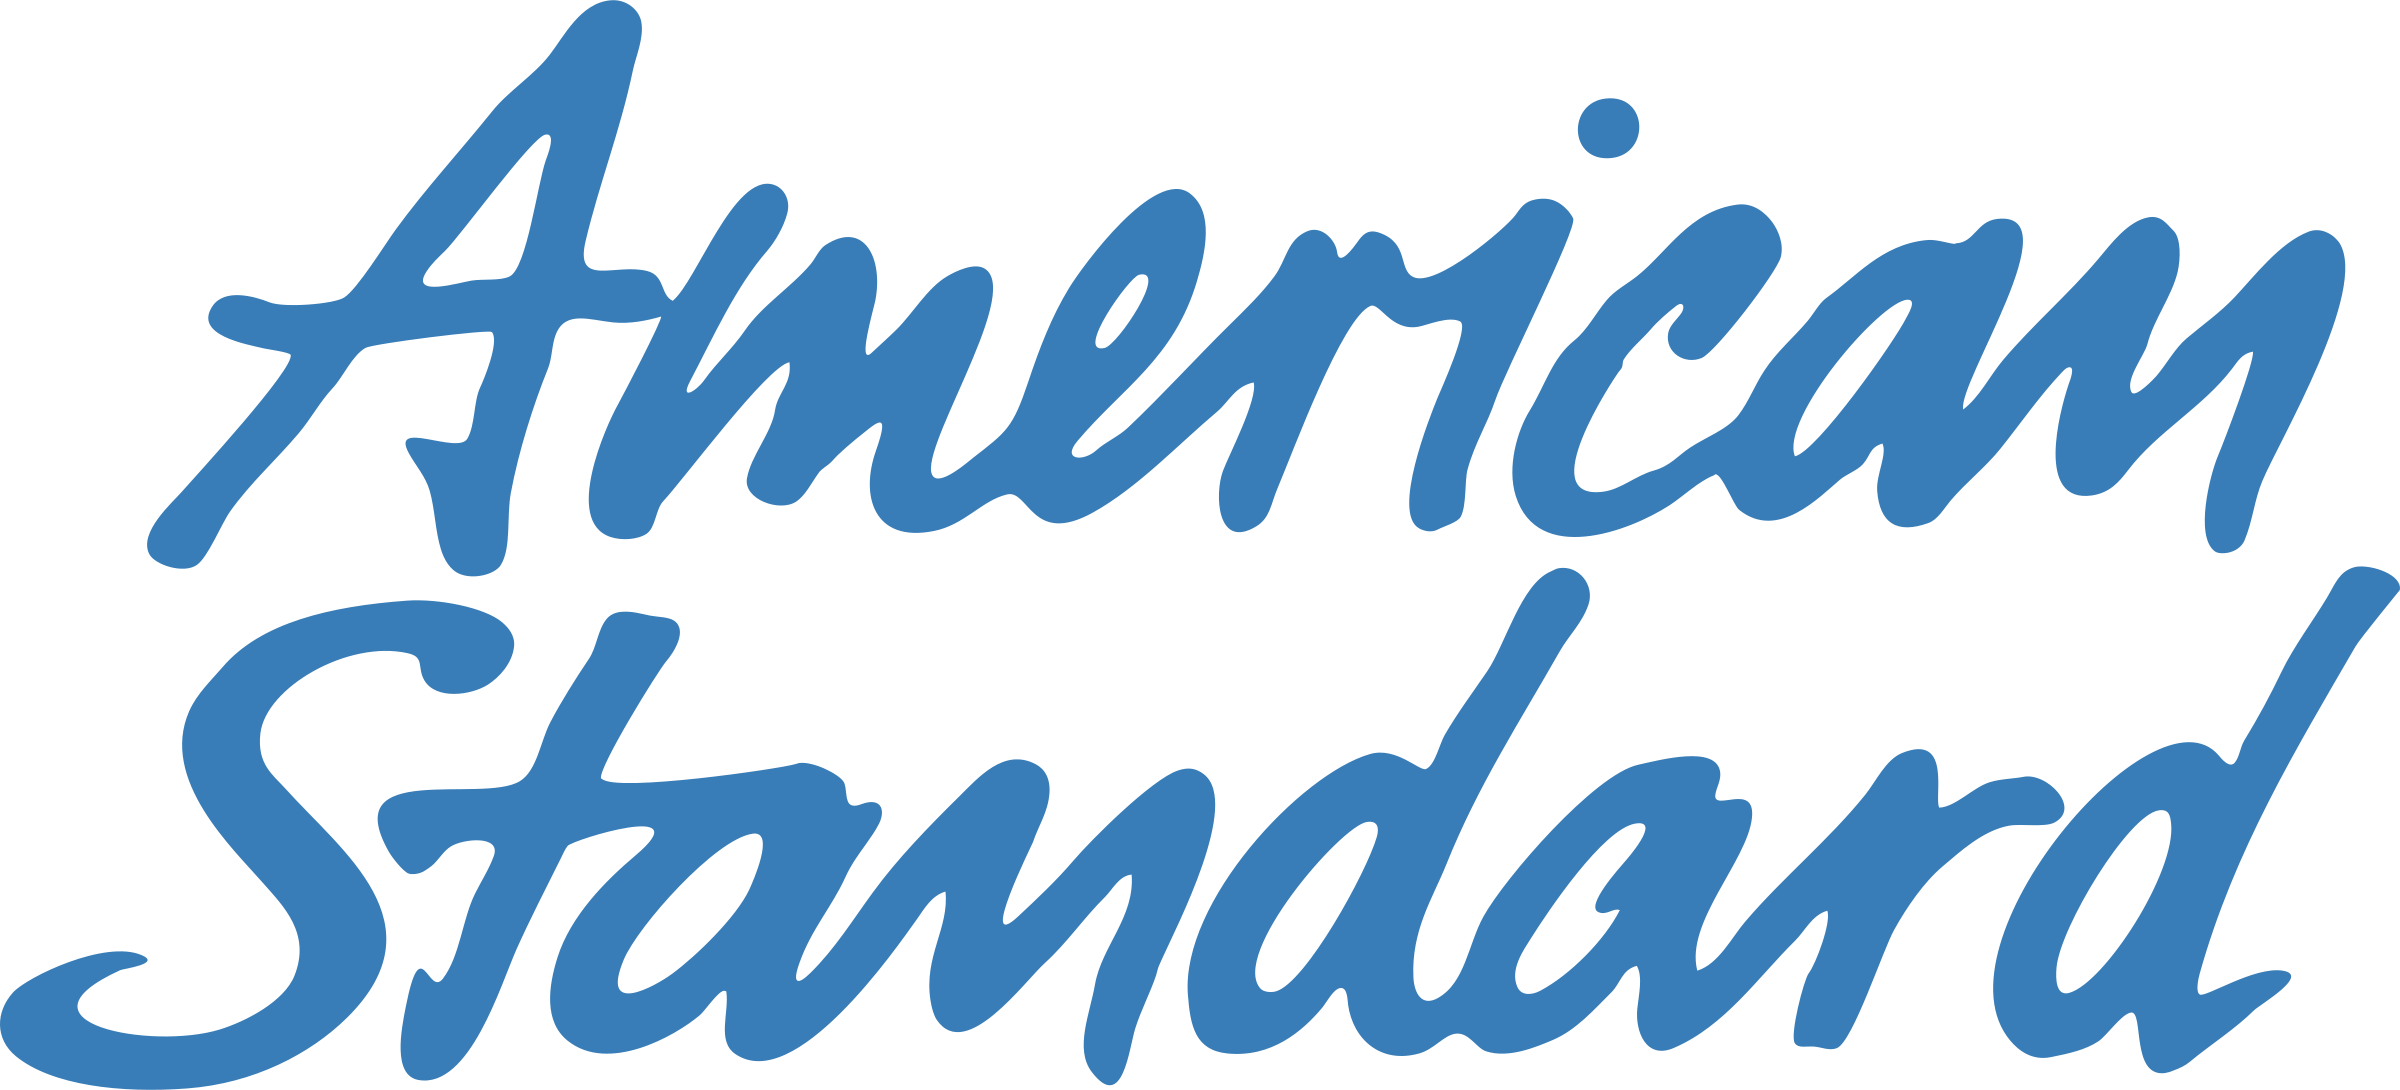 american-standard-1-logo-png-transparent